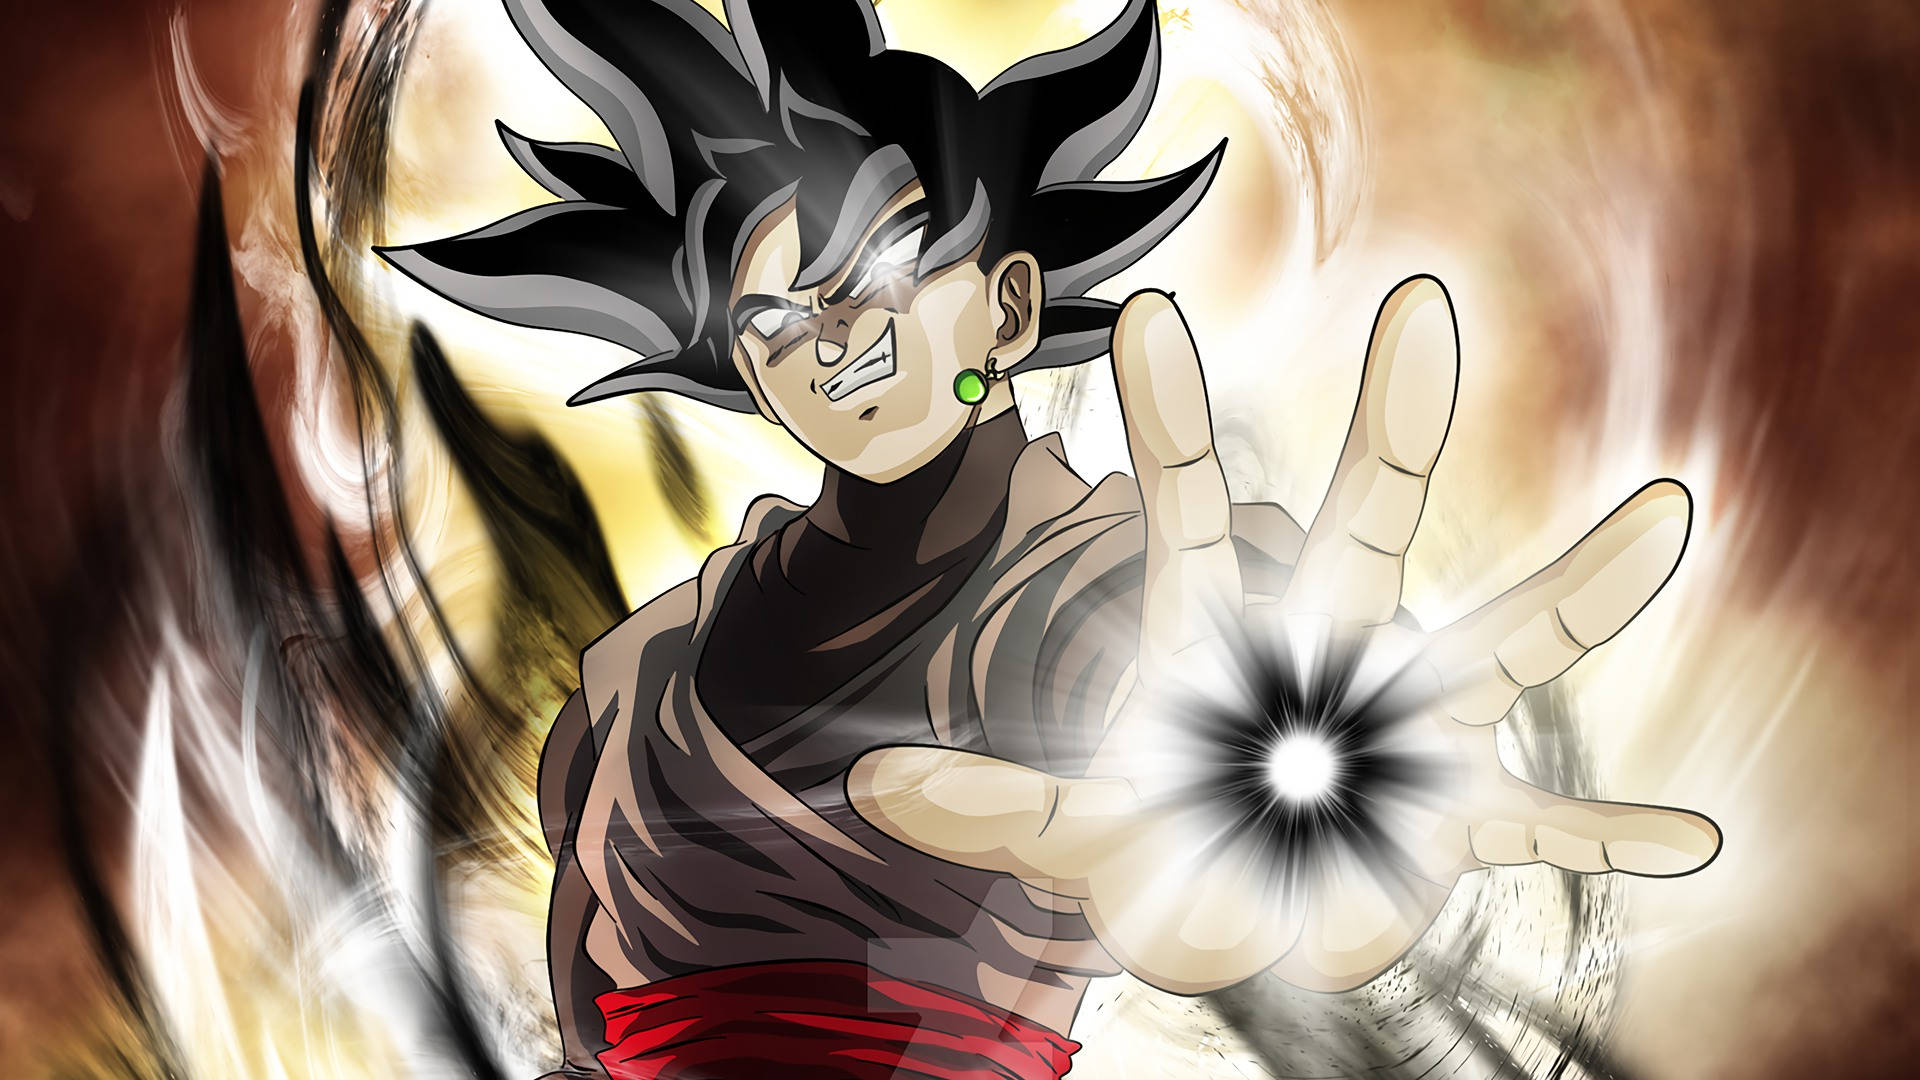 Mighty Goku Black - The Dark Saiyan, Displayed On An Iphone Screen Background